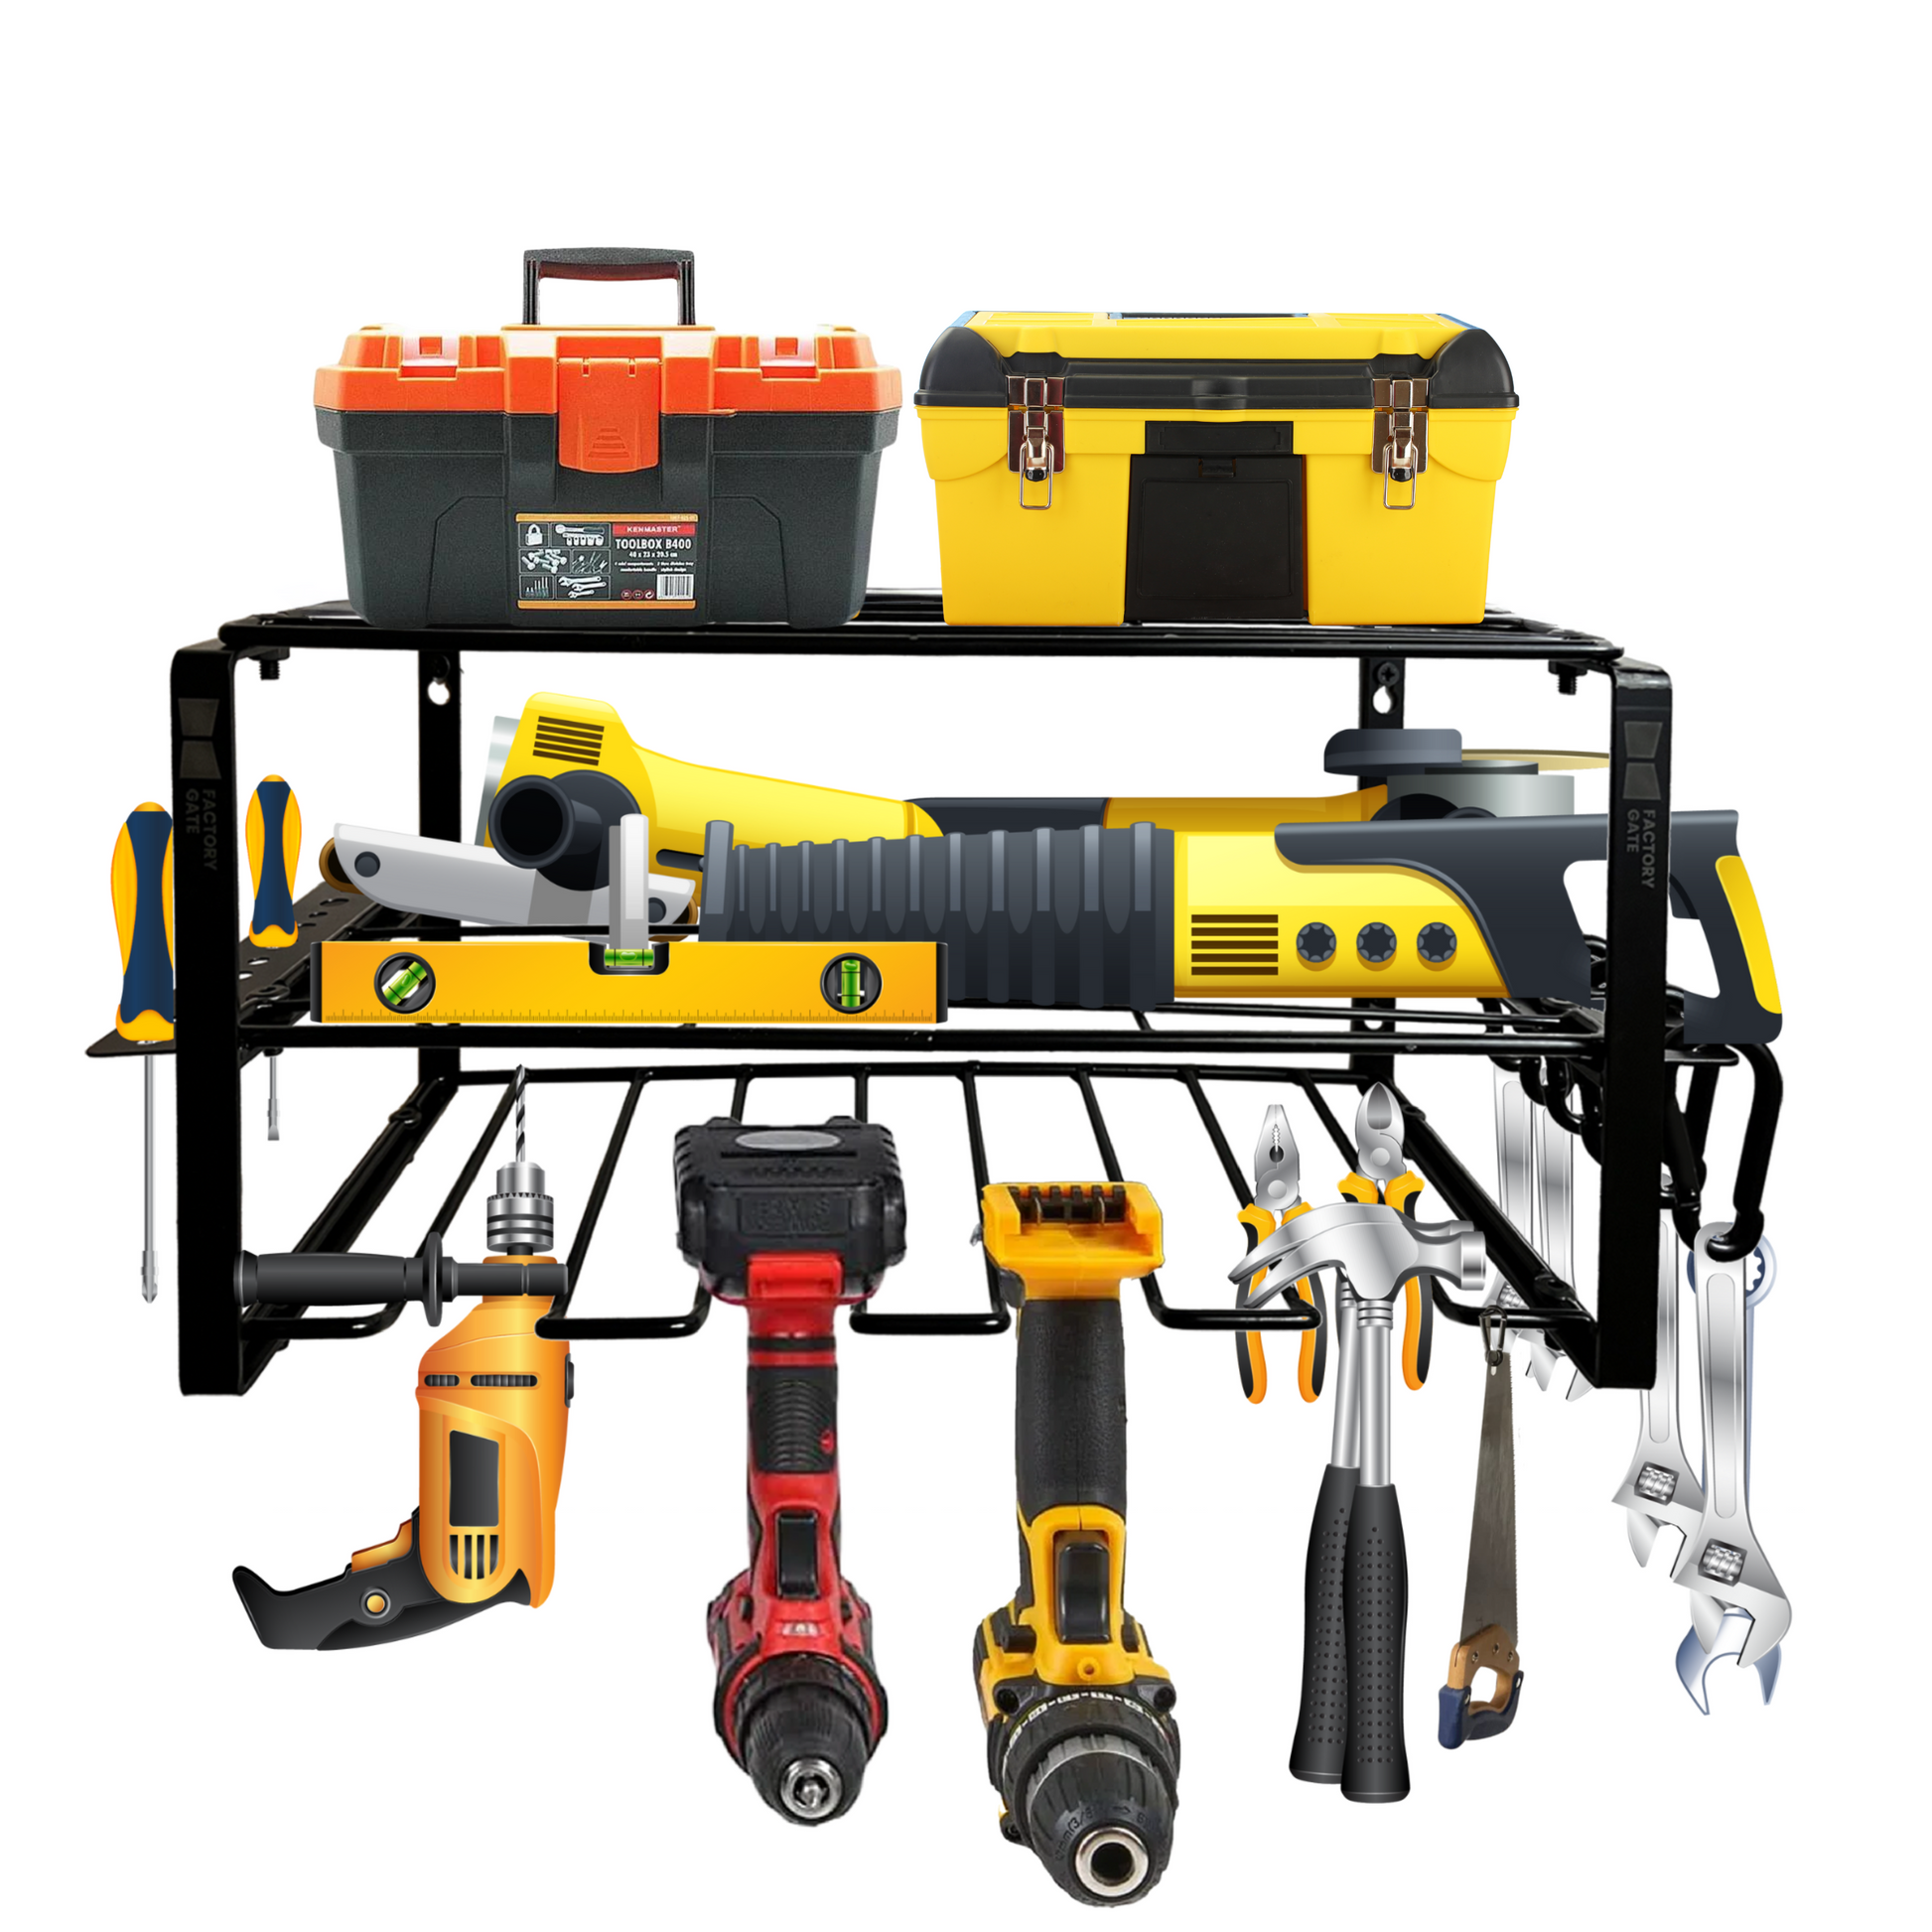 Tool Organizer | Garage Organization | Tool Storage | Garage Storage | Tool Box Organizer | Wrench Organizer | Power Tool Organizer | Power Tool